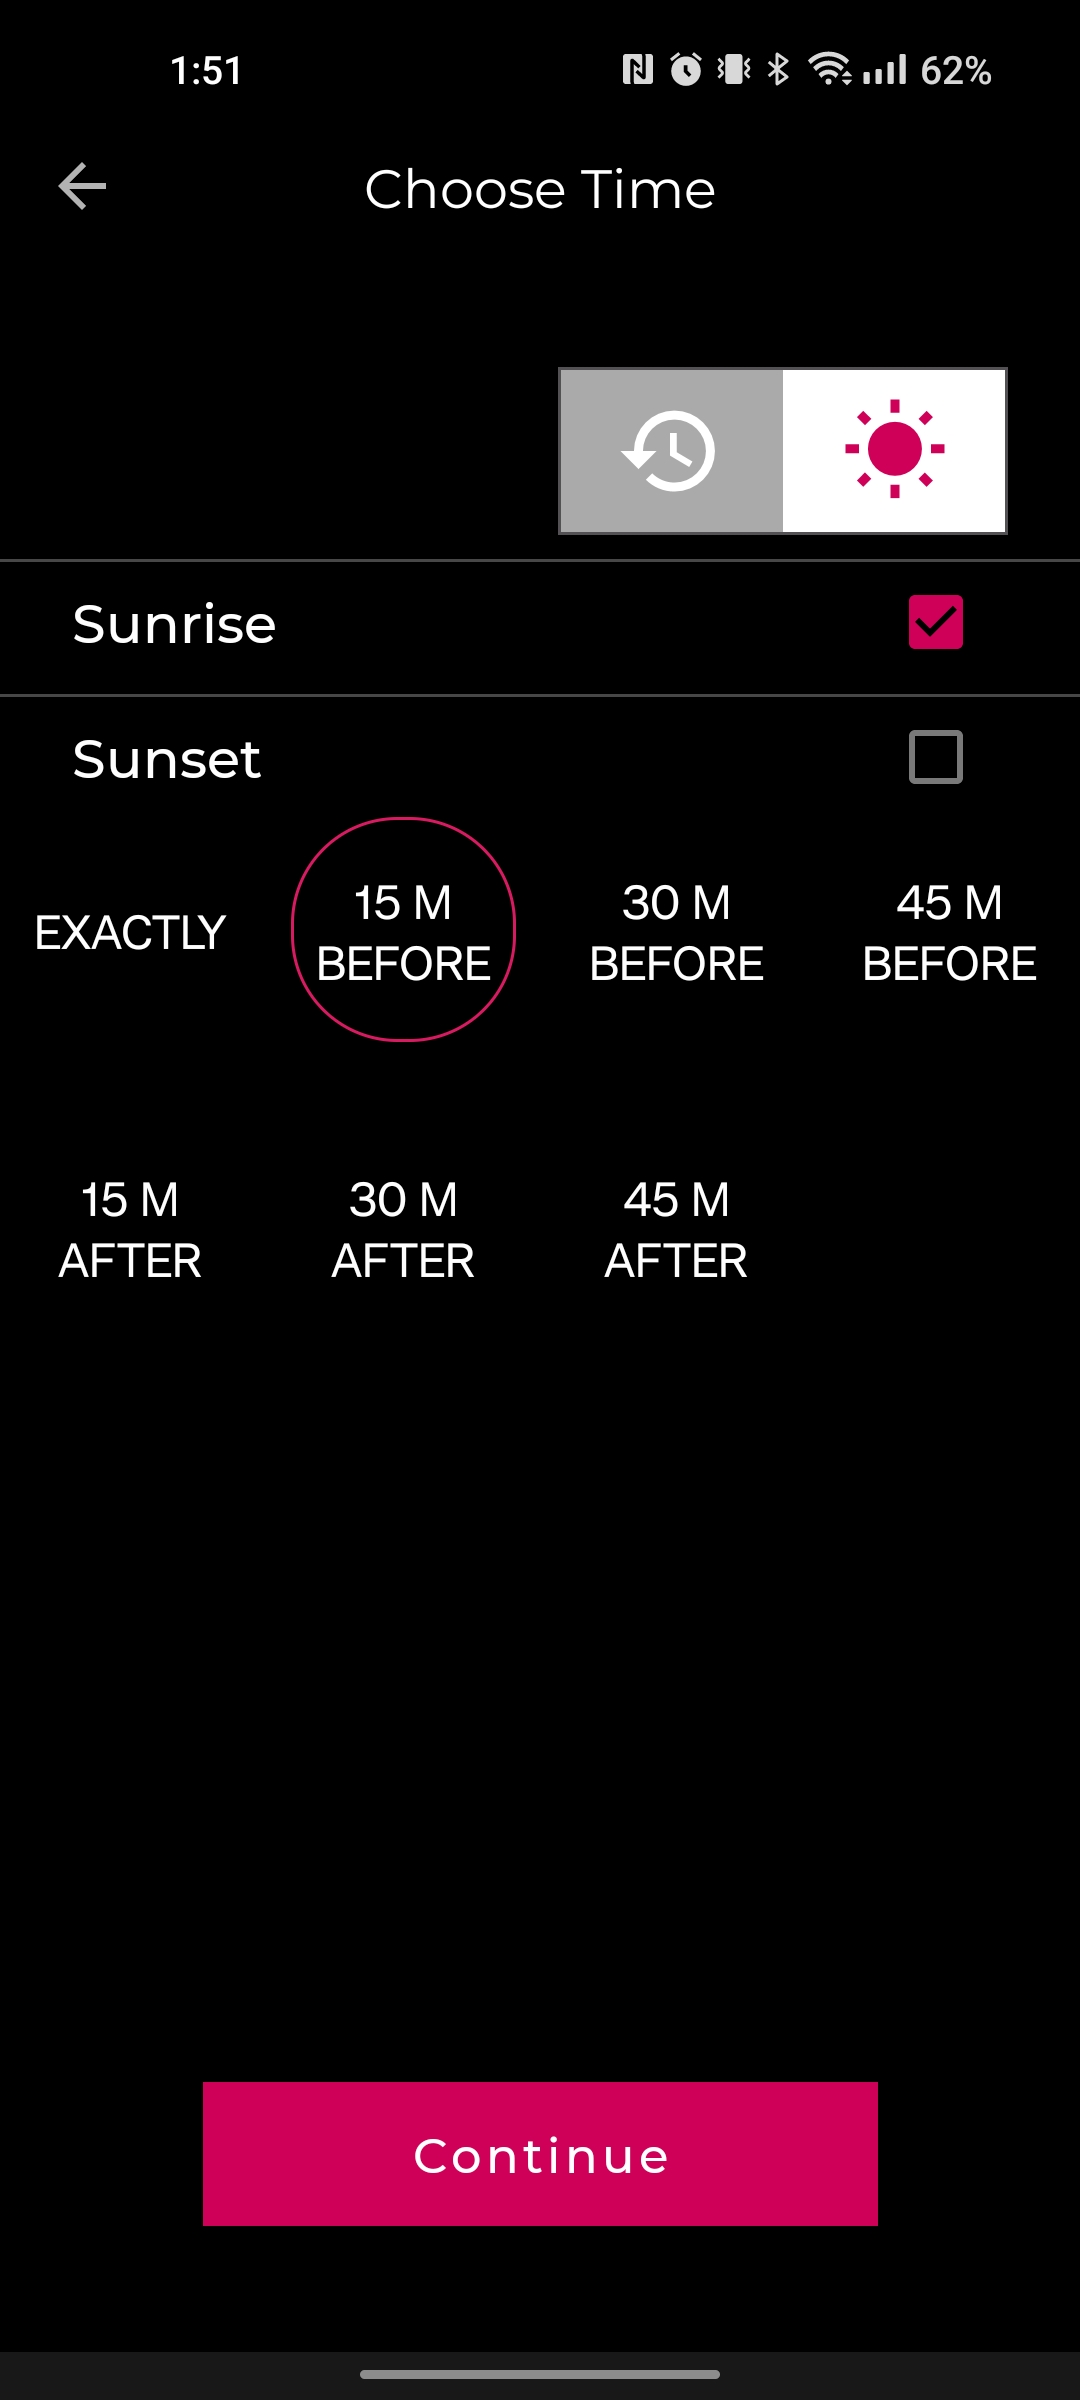 5. Select sunrise-sunset.jpg